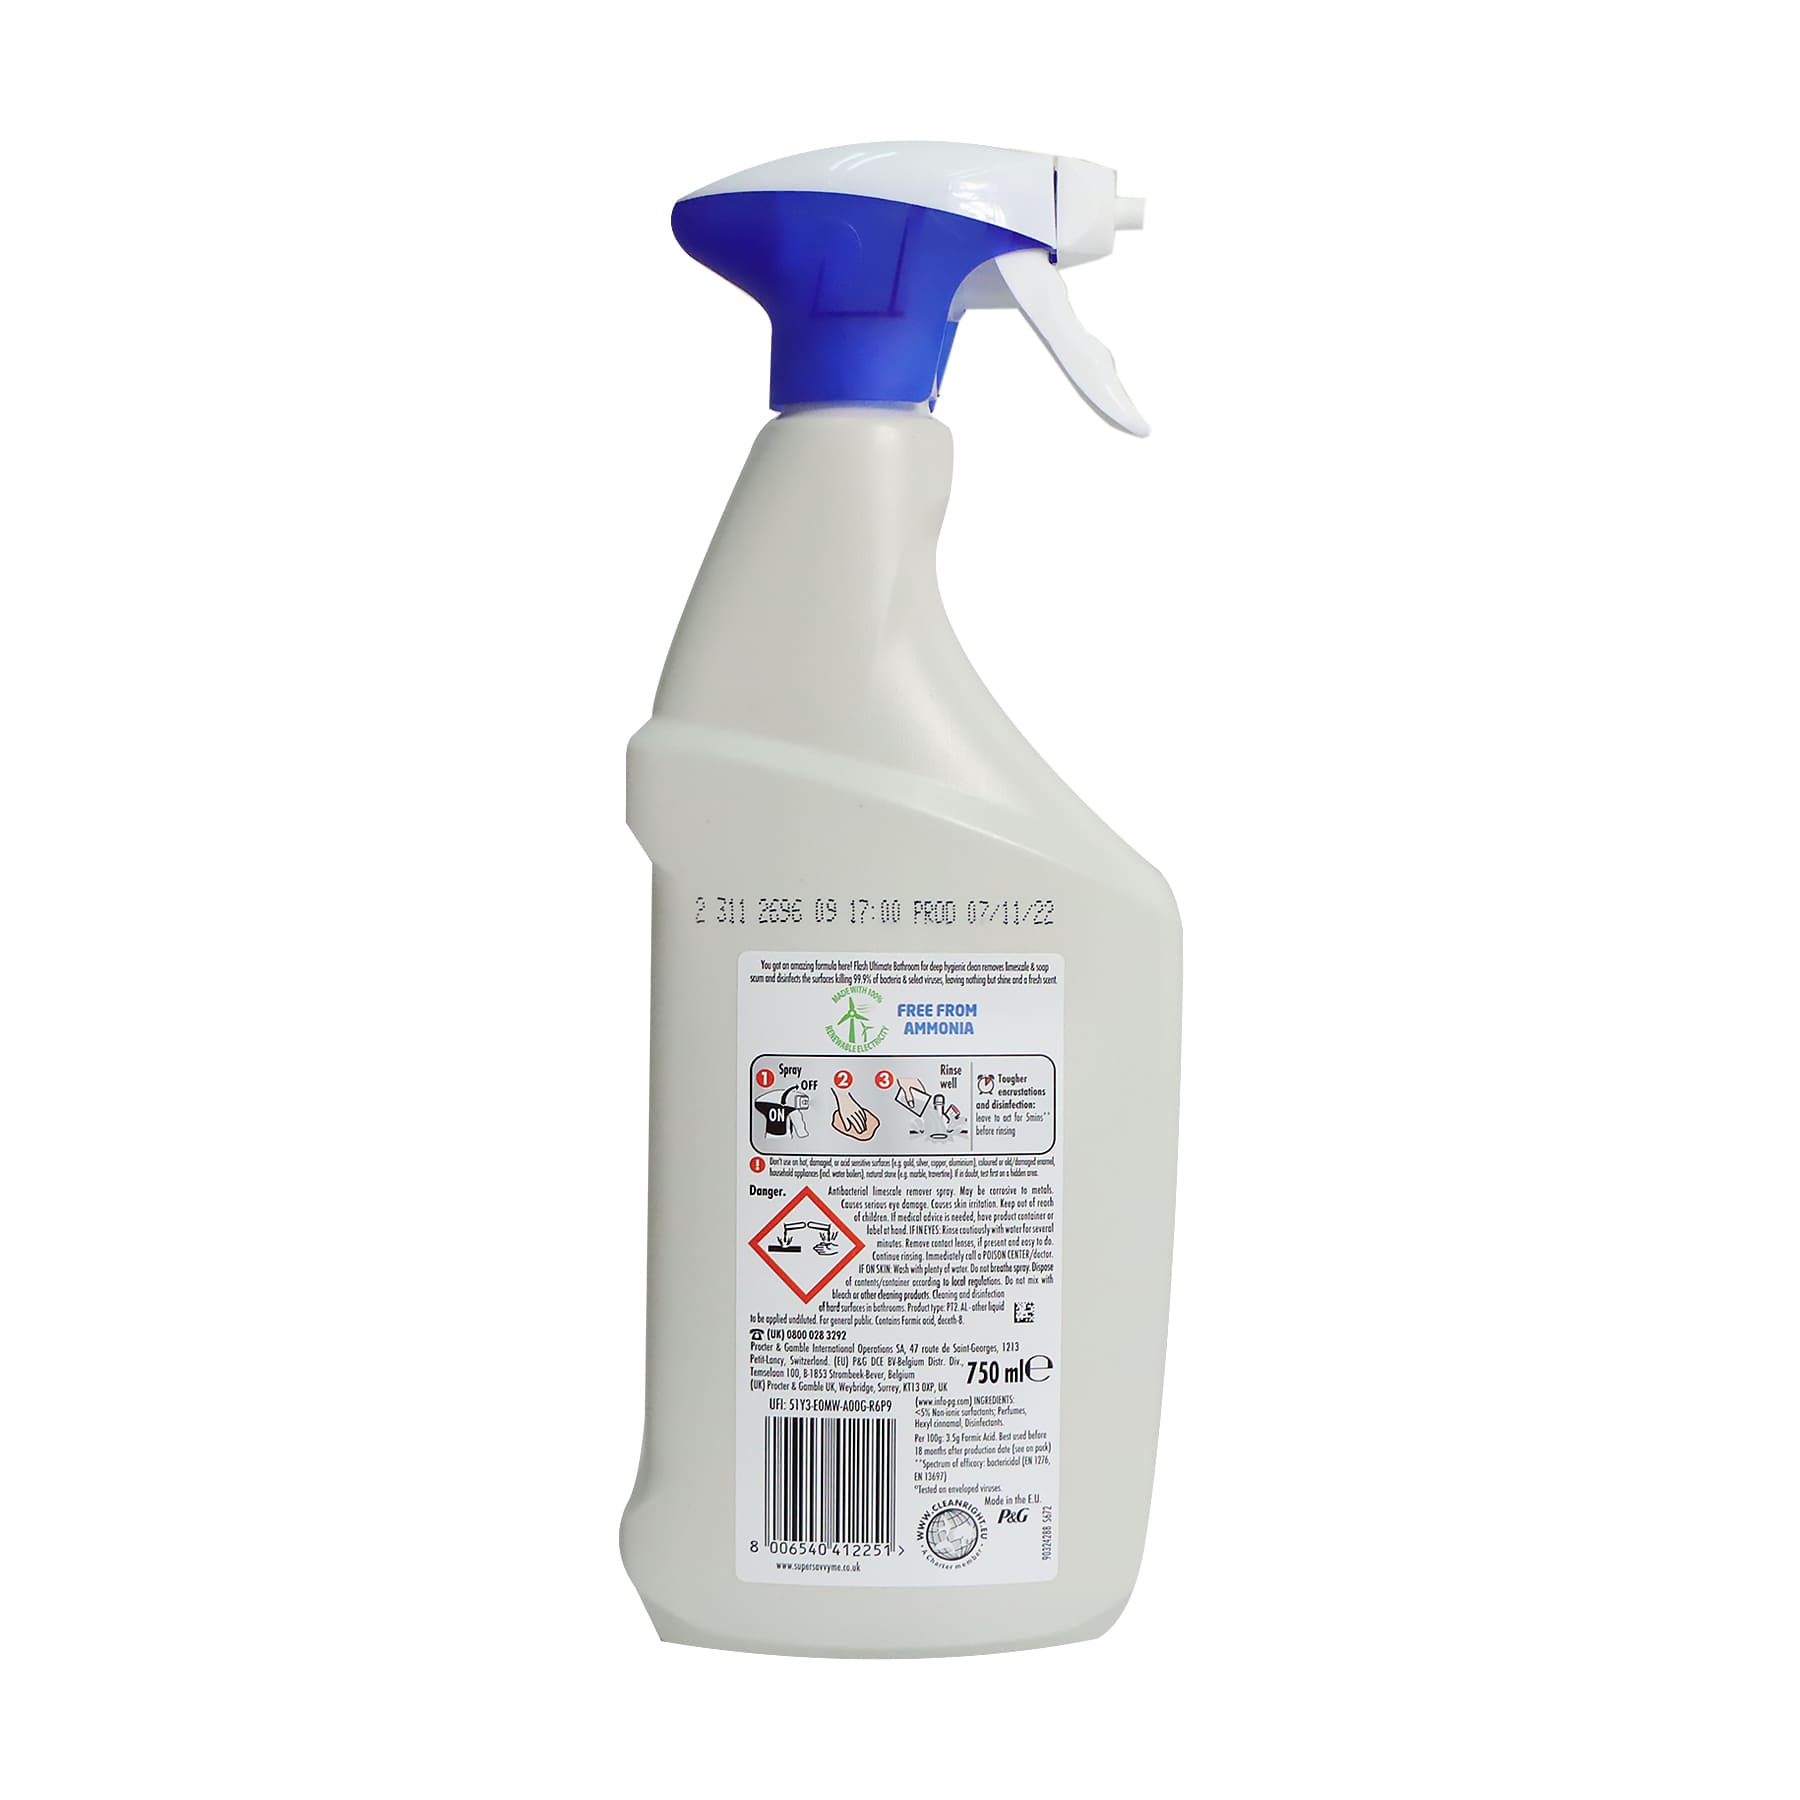 [P&G] Flash Antibacterial Bathroom Spray 750ml